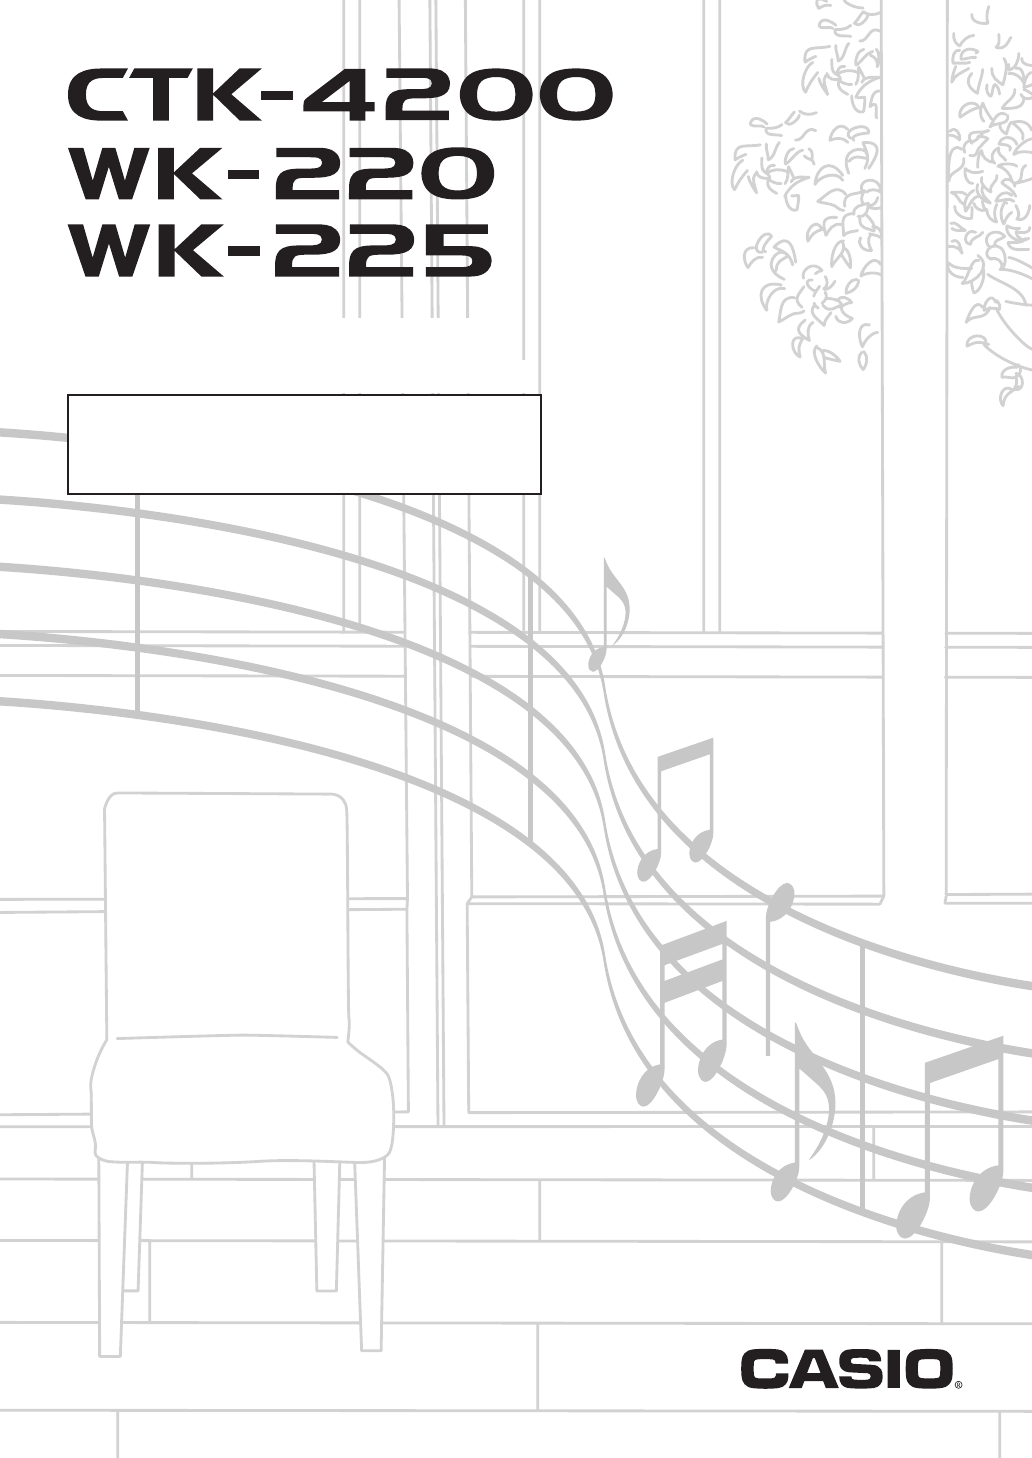 Handleiding Casio WK-220 (pagina 1 van 77) (Nederlands)